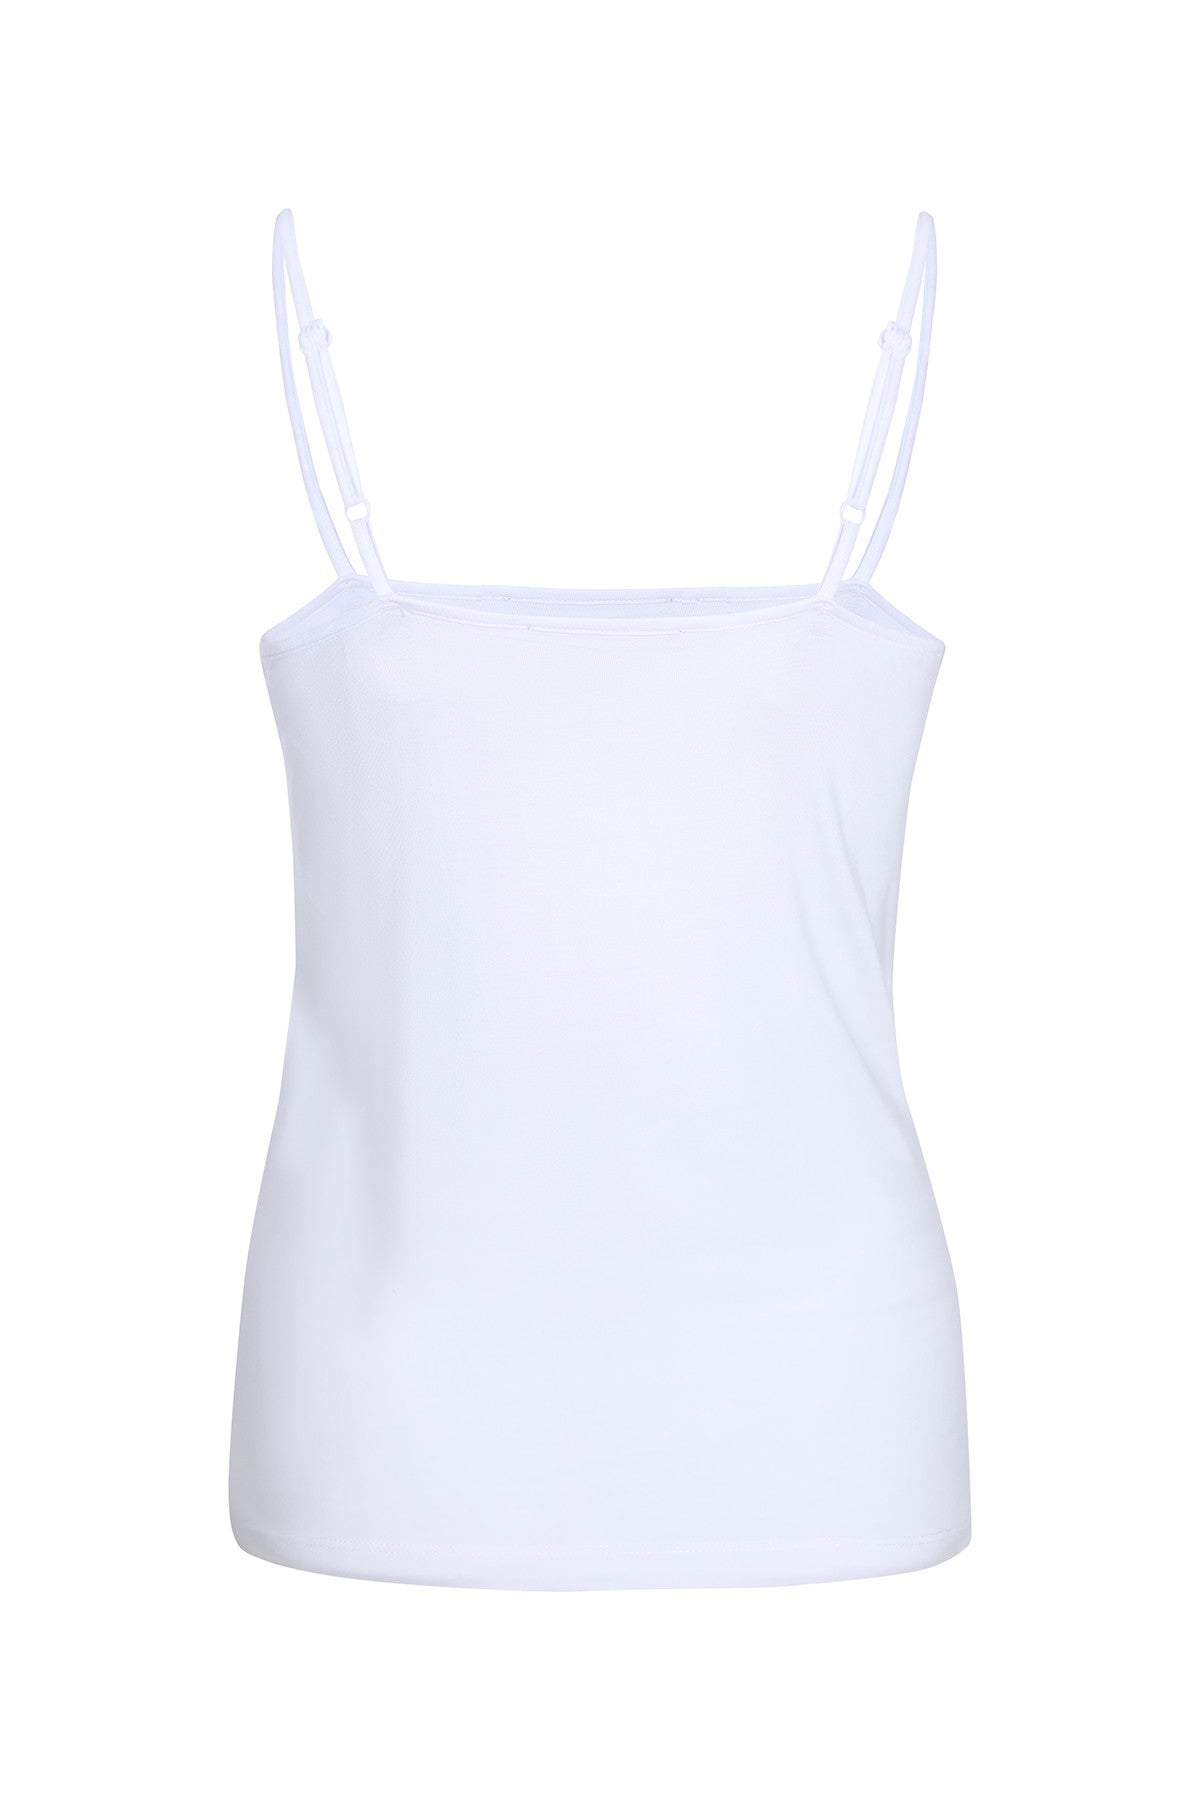 Basic Cami with adjustable straps | White | 7537WW – Ballentynes ...